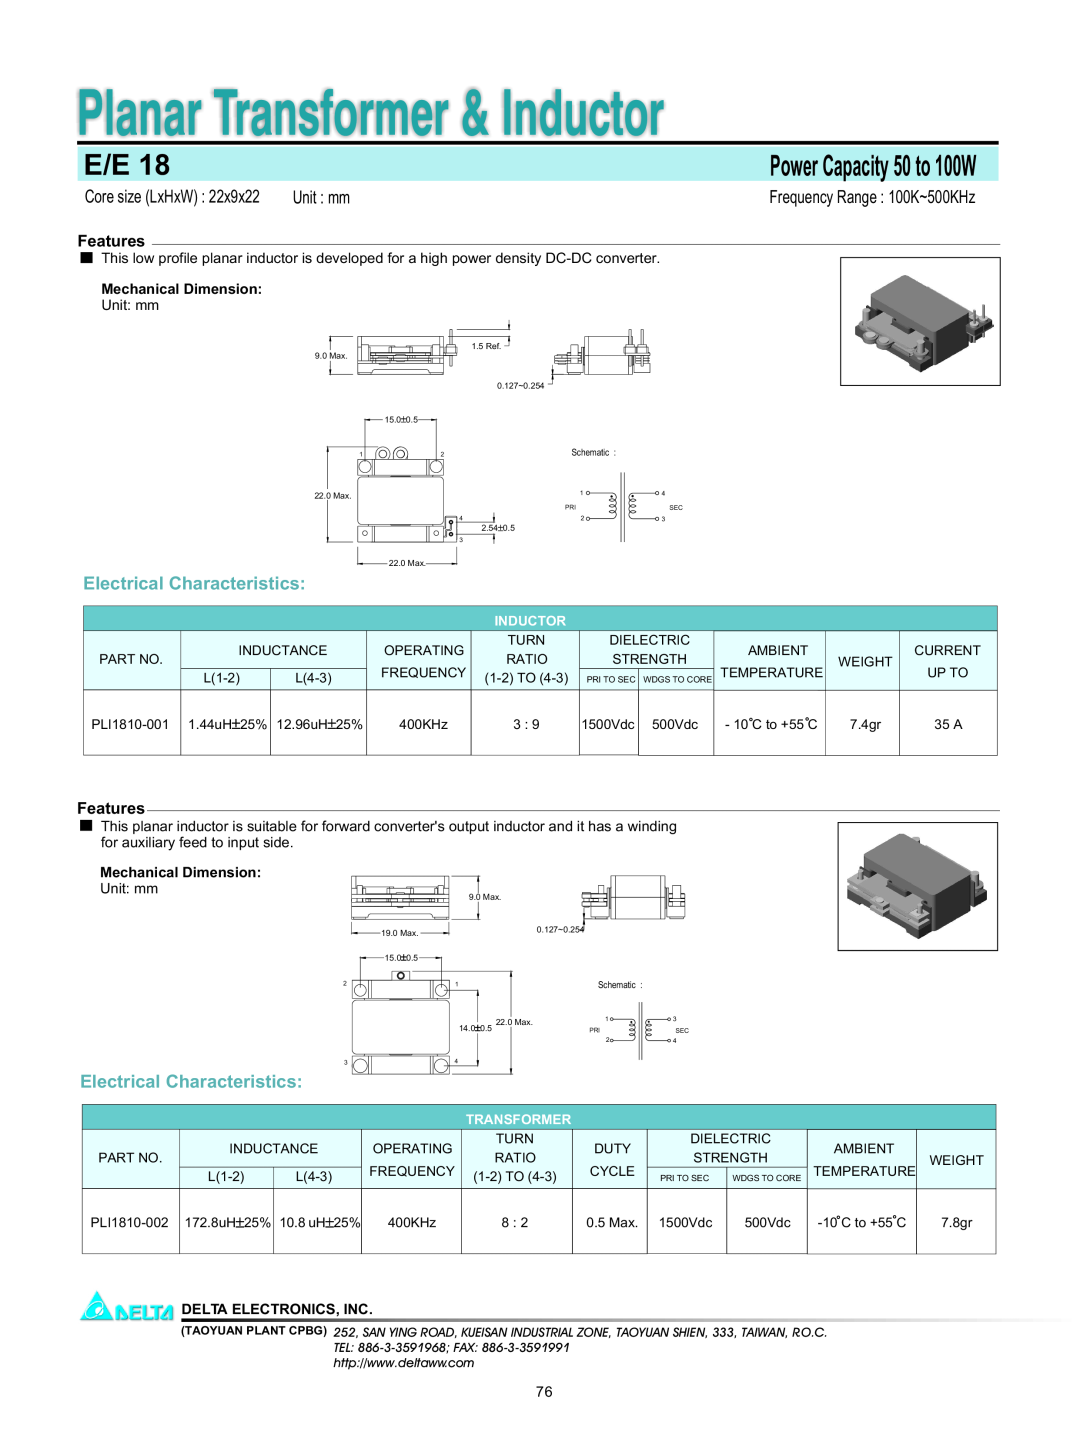 Delta Electronics E/E 18 manual Planar Transformer & Inductor, Unit mm, Electrical Characteristics, Features 